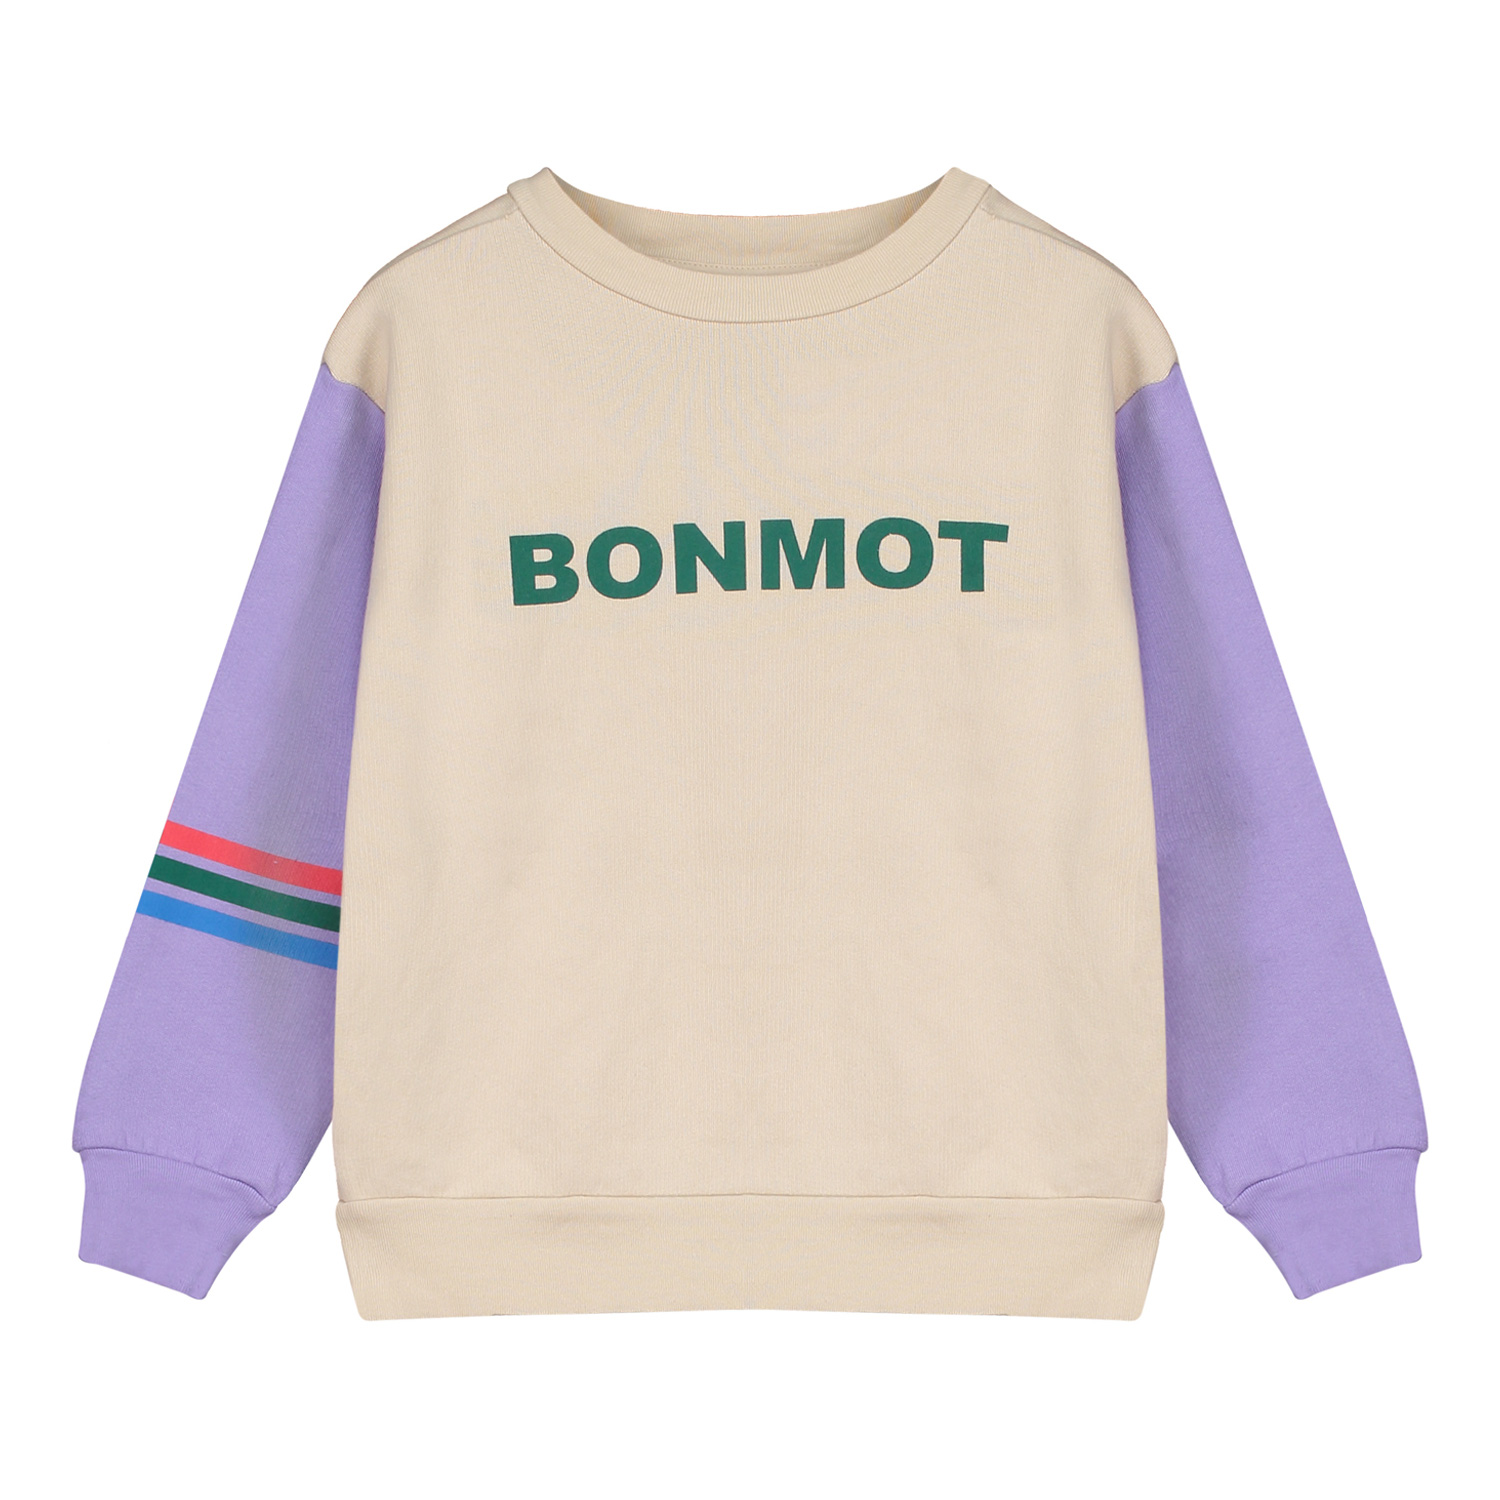 [BONMOT/본못] Sweatshirt bonmot